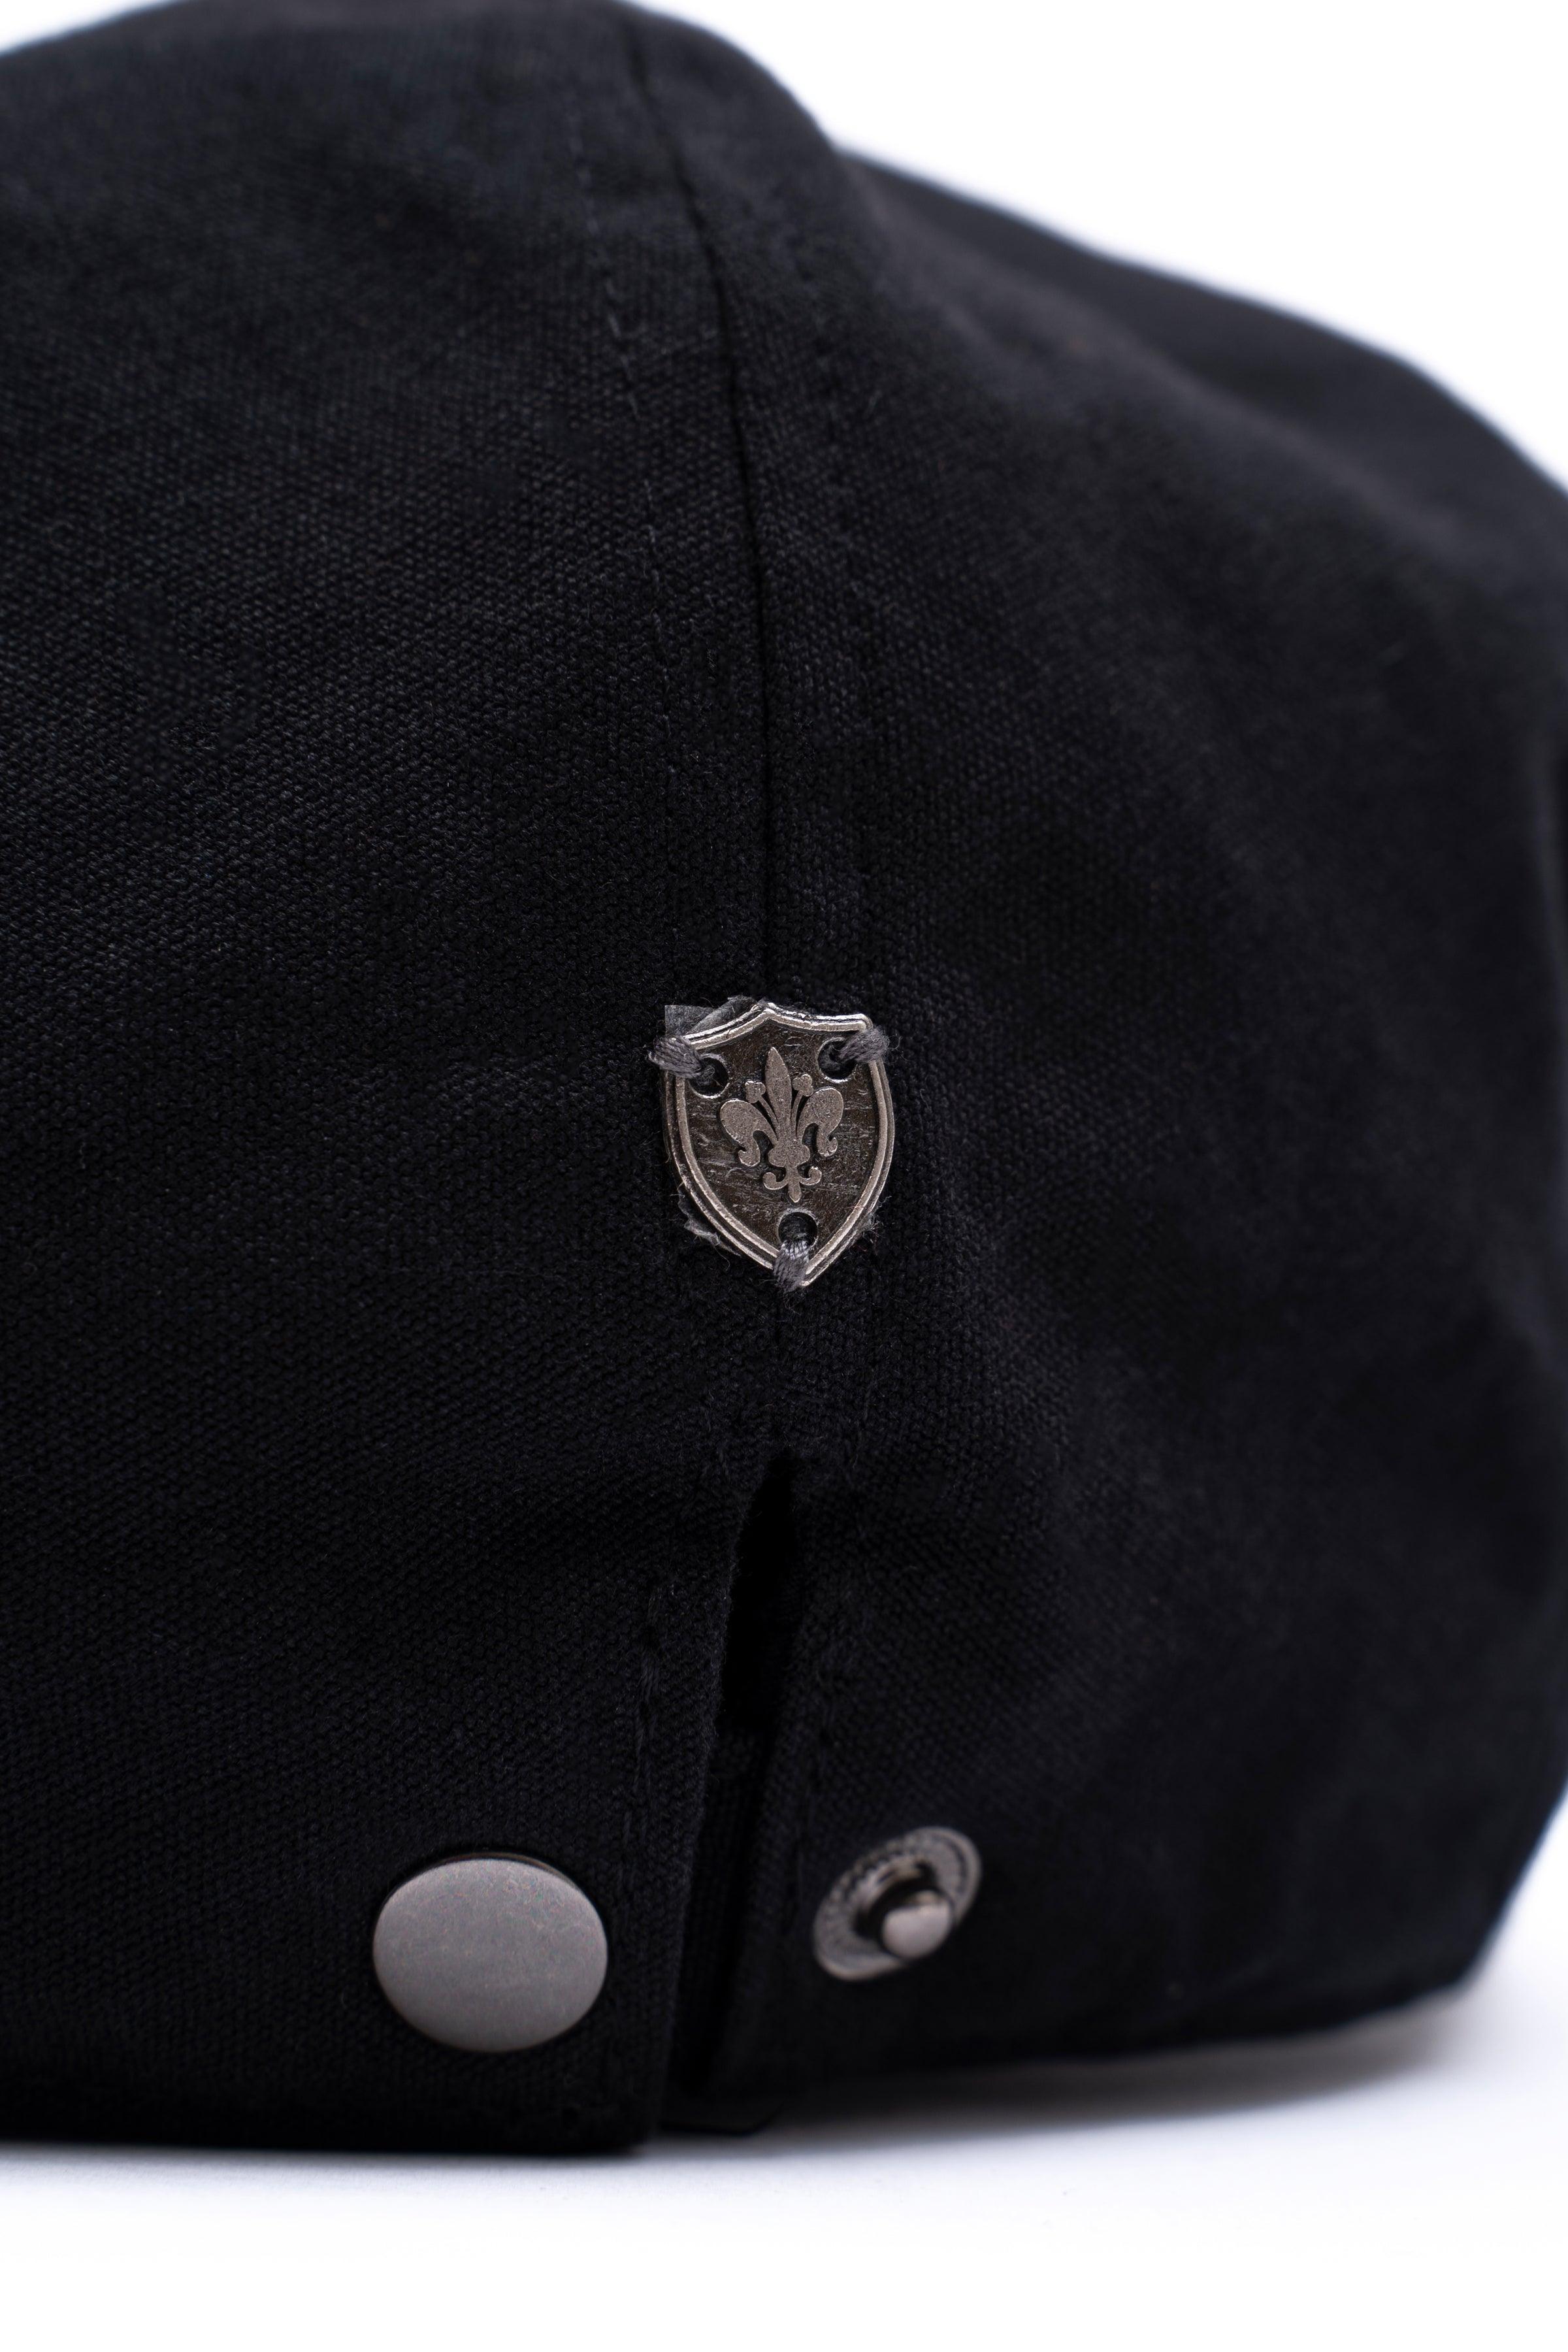 GOLF CAP at Charcoal Clothing